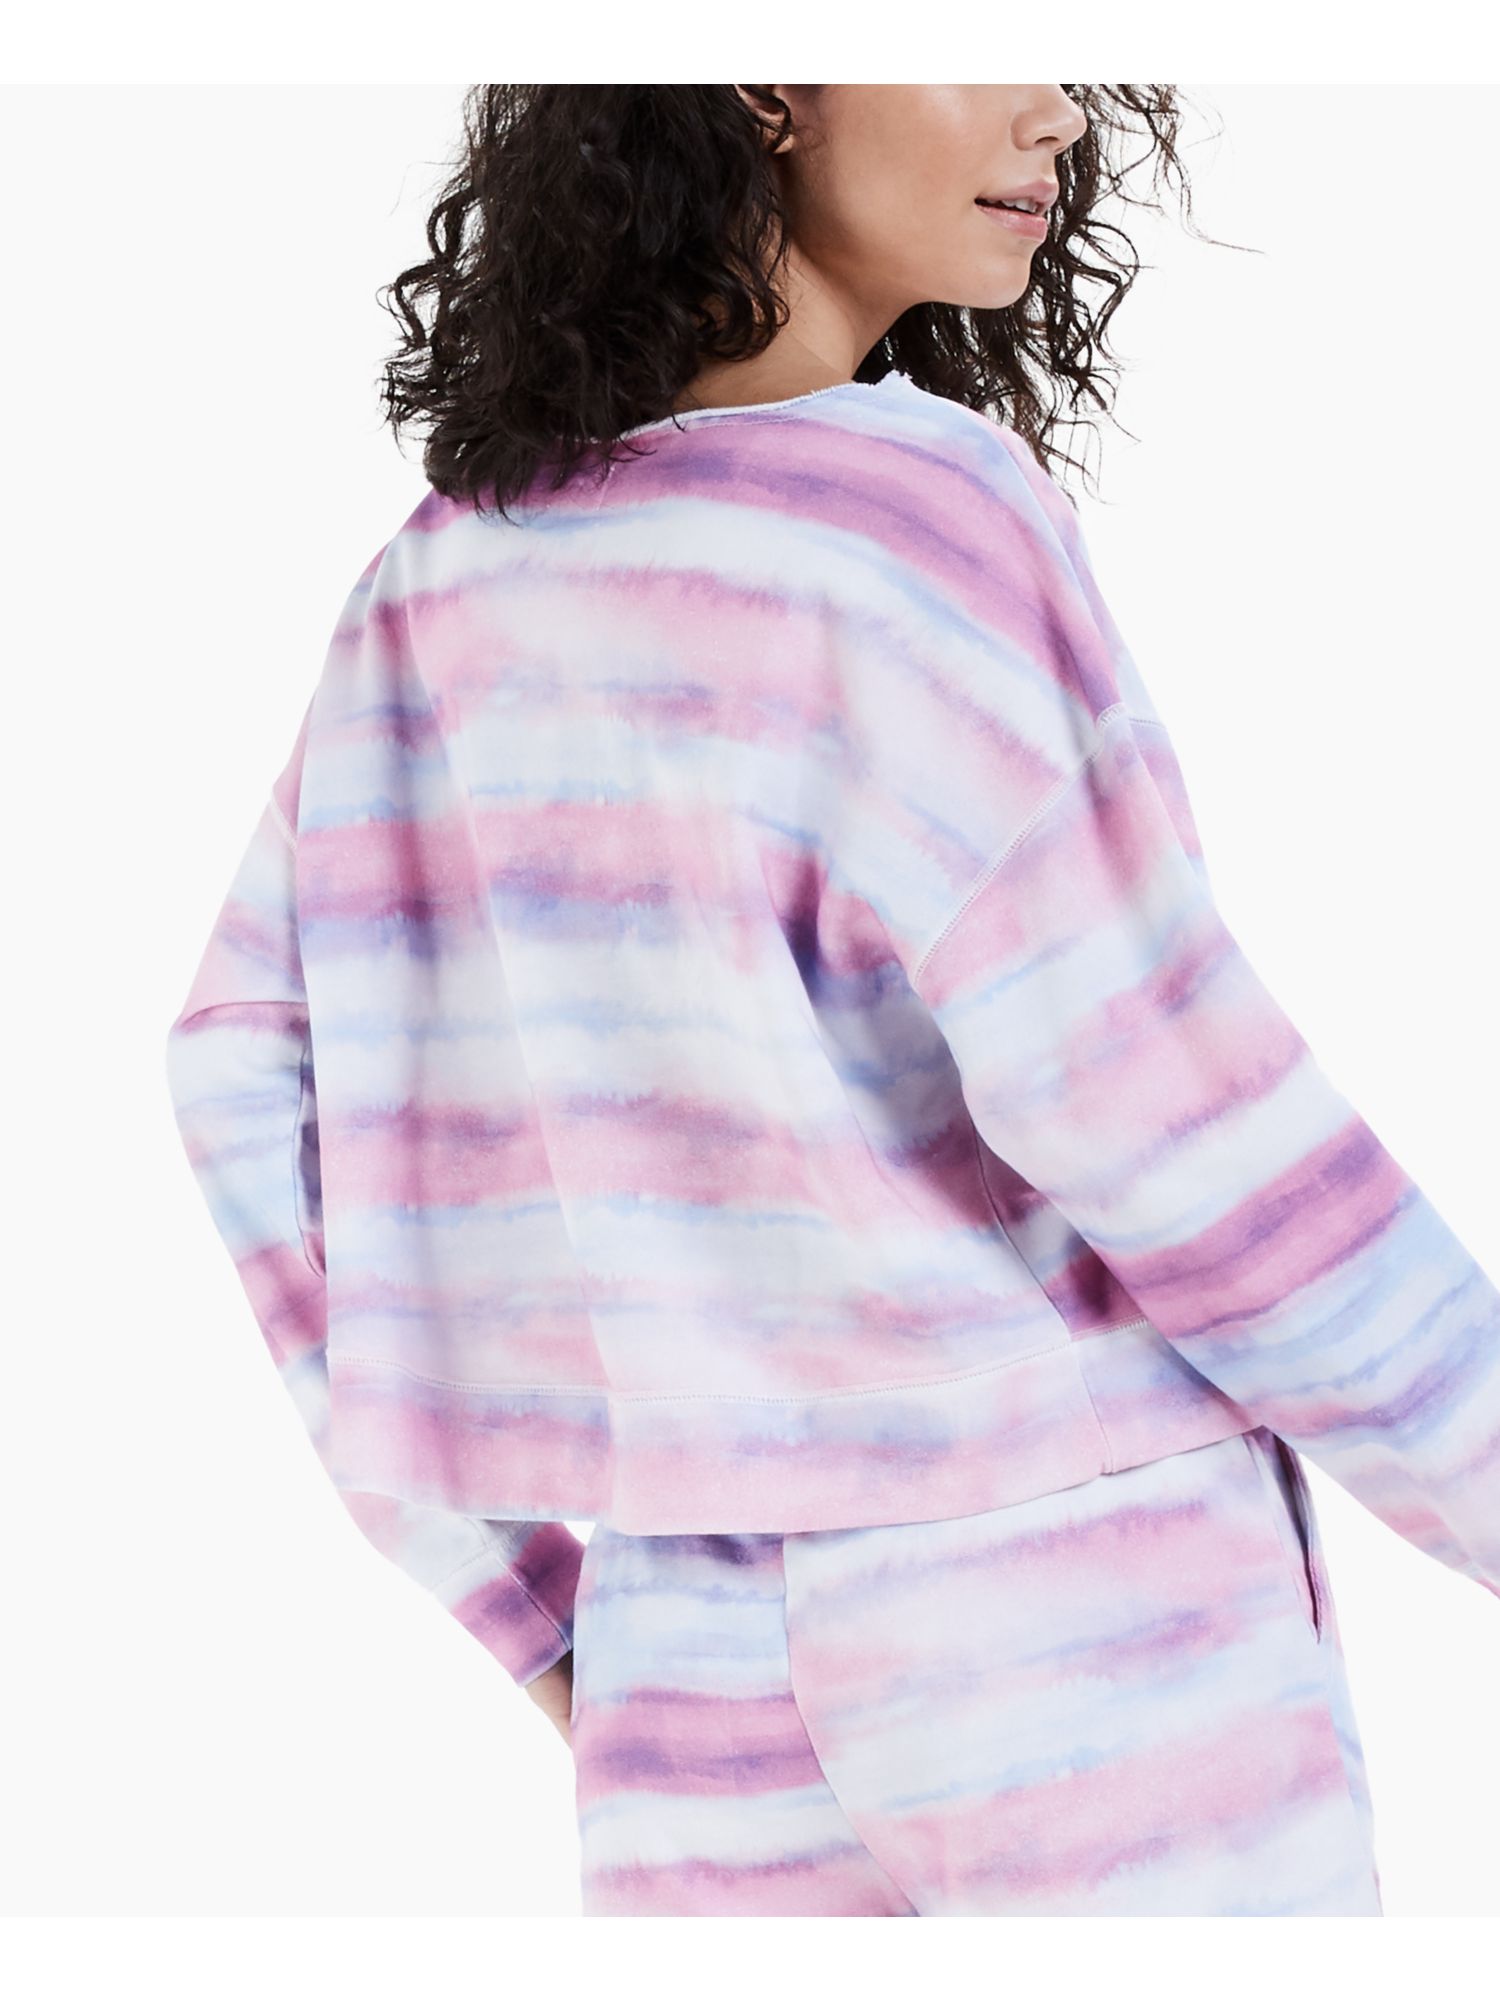 JENNI Intimates Pink French Terry Crew Neck Striped Sleep Shirt Pajama Top M